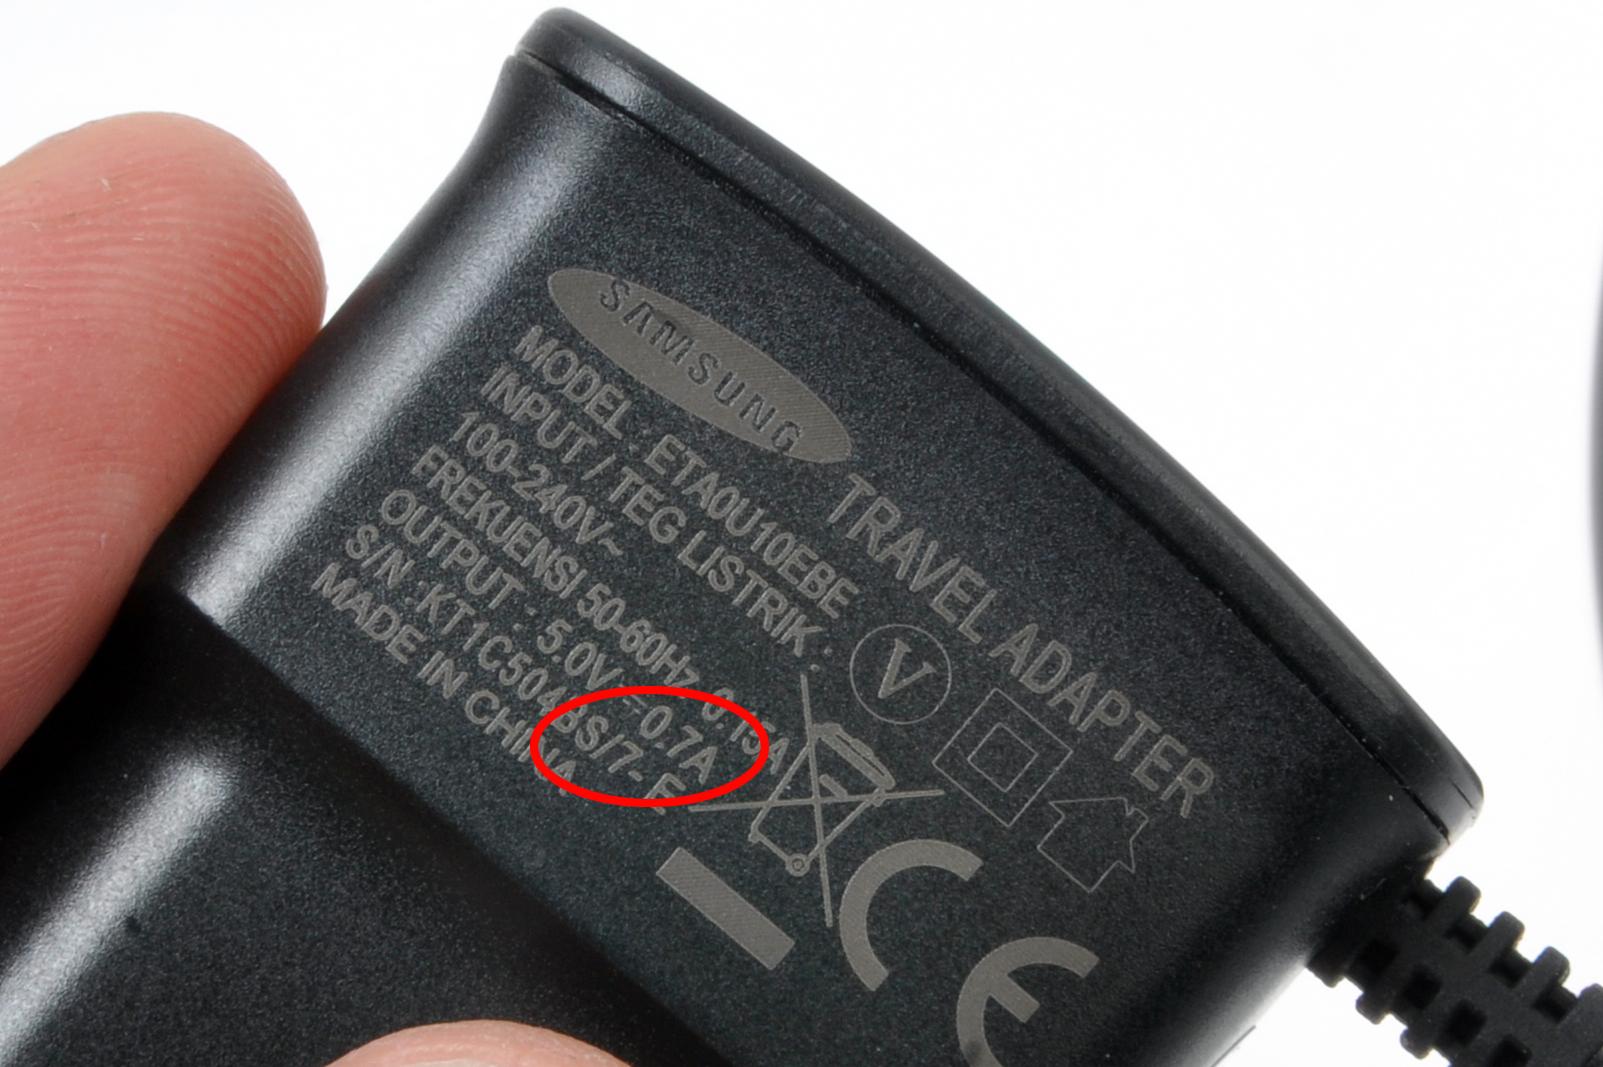 Denne USB-strømforsyningen leverer bare 700 milli-ampere (mA) strøm, og lader moderne smartmobiler svært sakte. Finn en strømforsyning på minst 1 A – gjerne mer.Foto: Kurt Lekanger, Amobil.no